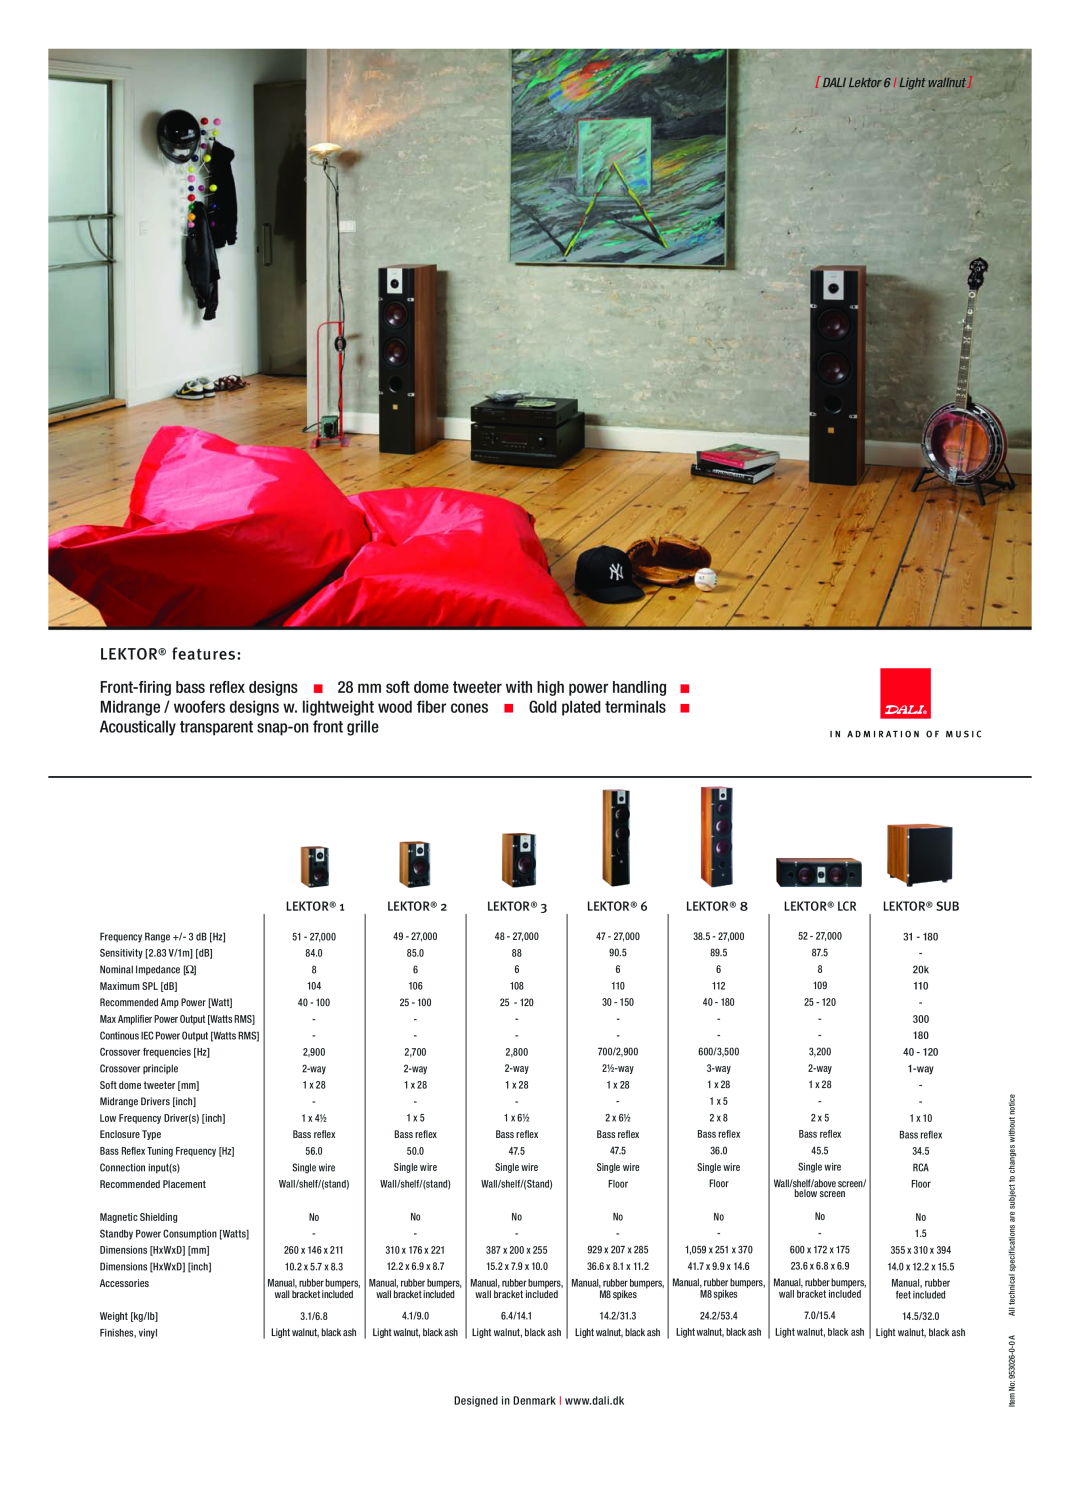 DALI Loudspeakers Lektor LEKTOR features, Acoustically transparent snap-onfront grille, Front-firingbass reflex designs 